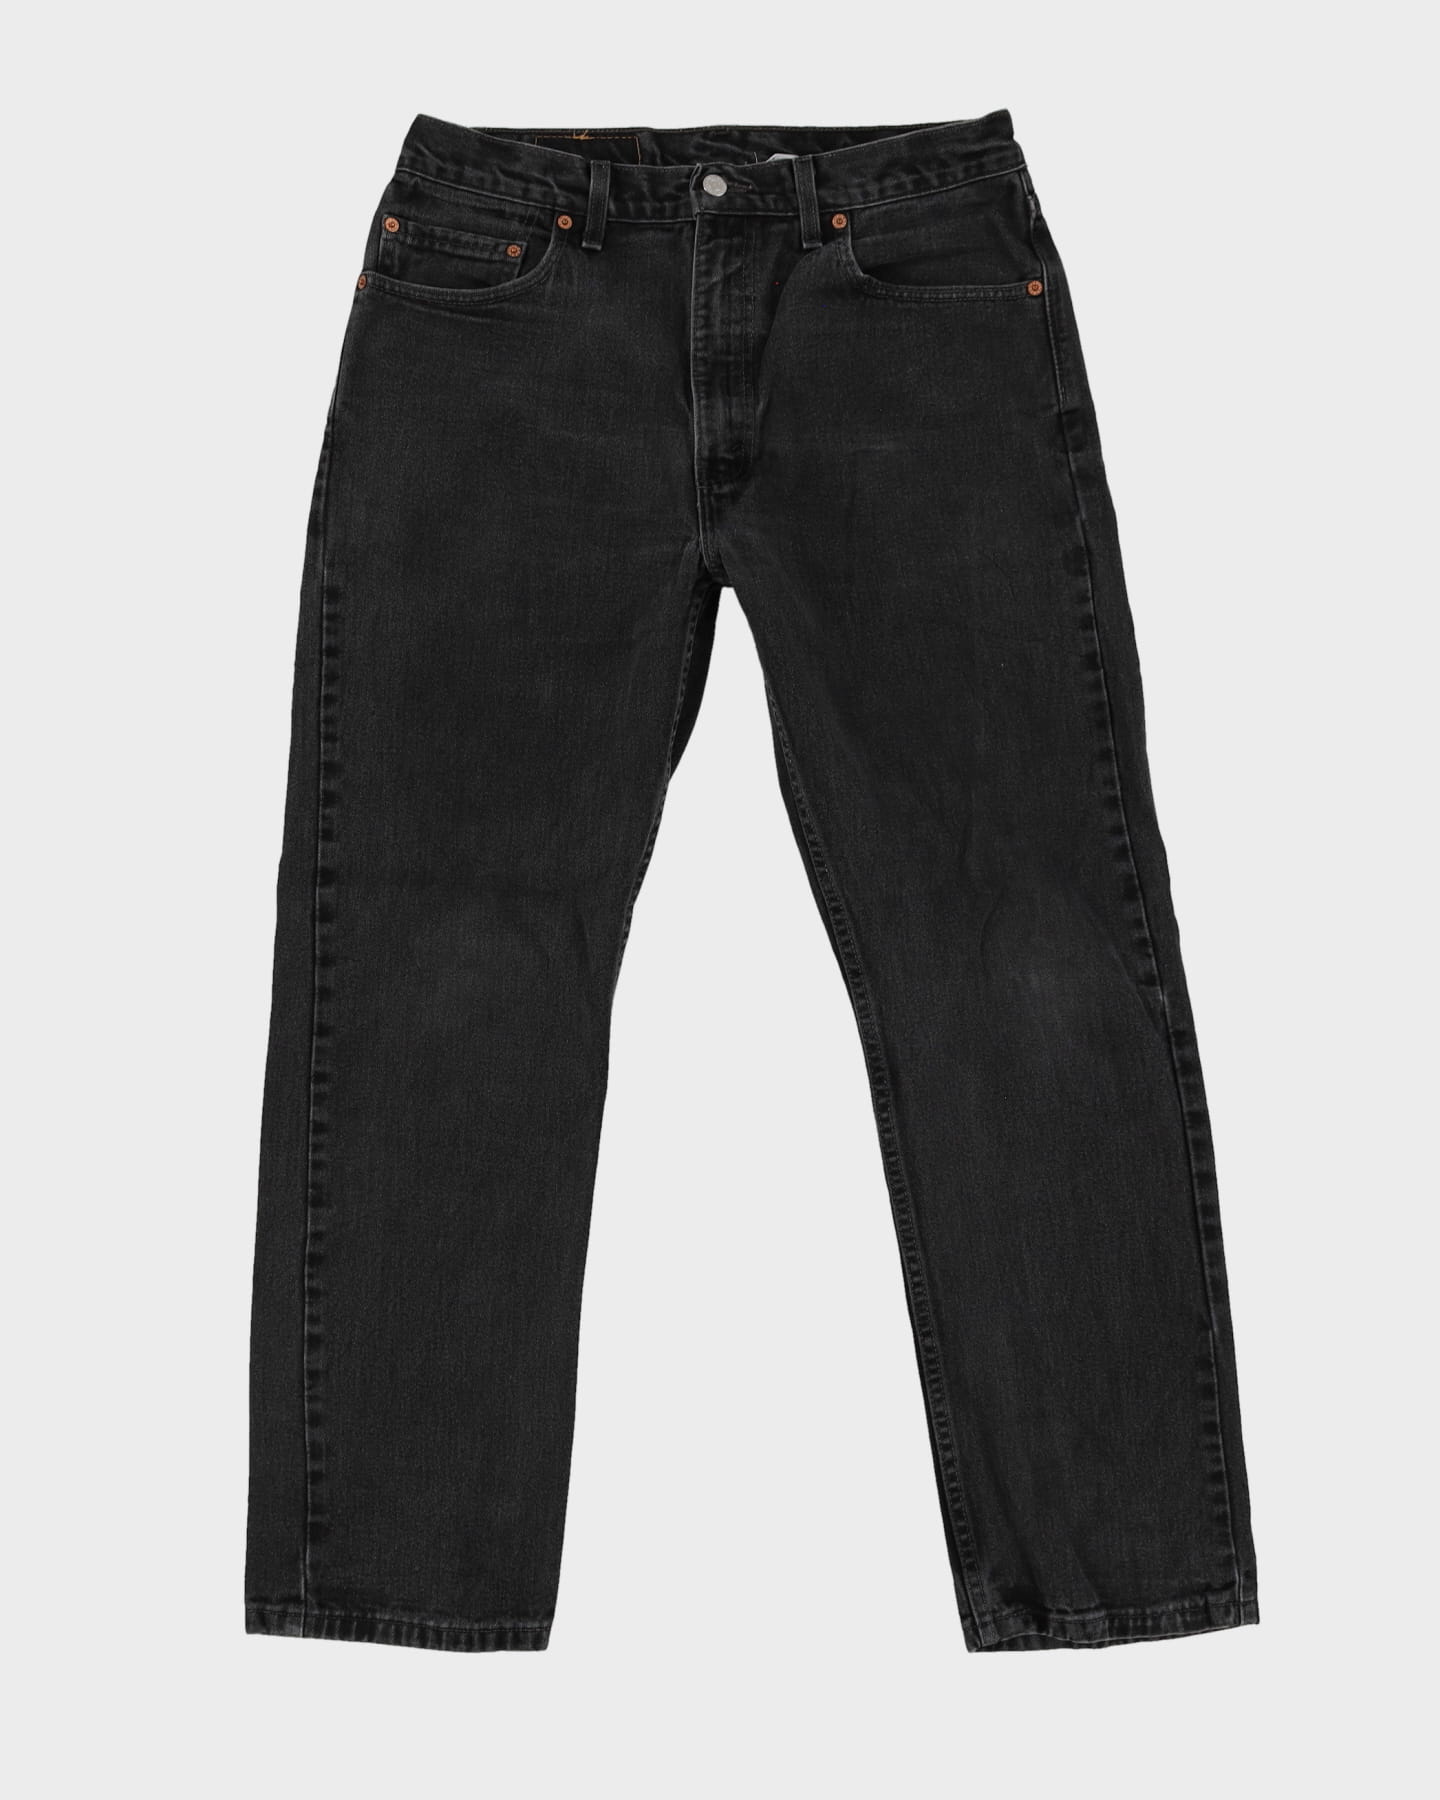 Vintage 80s Levi's 505 Black Dark Wash Jeans - W34 L30